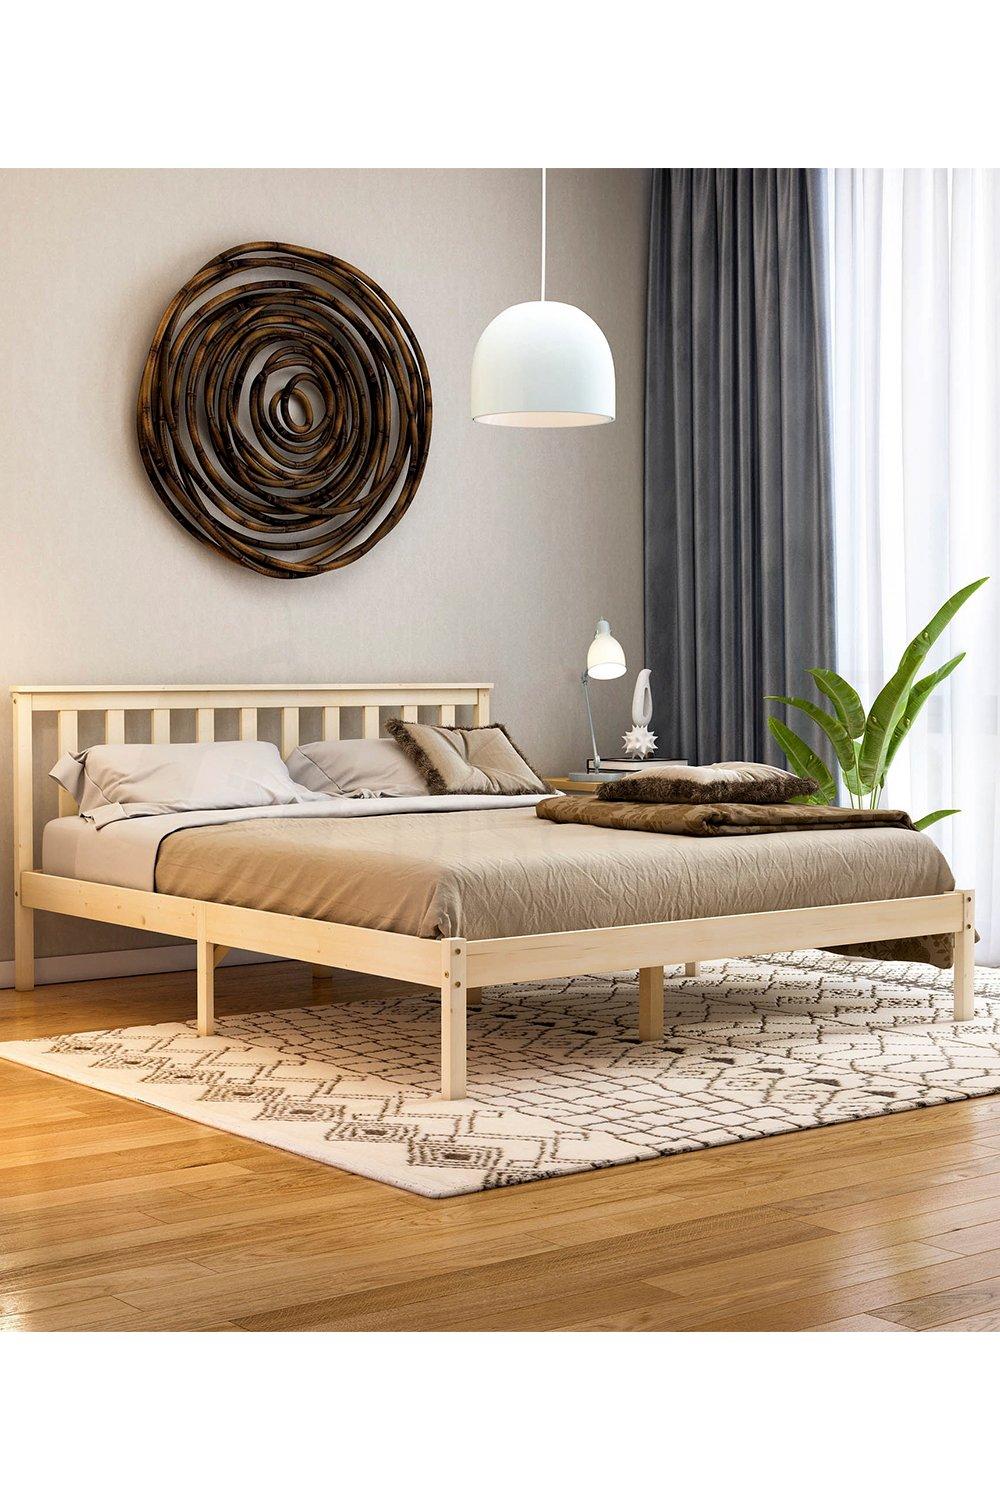 Vida Designs Milan King Size Wooden Bed Frame Low Foot 820 x 1595 x 2050 mm